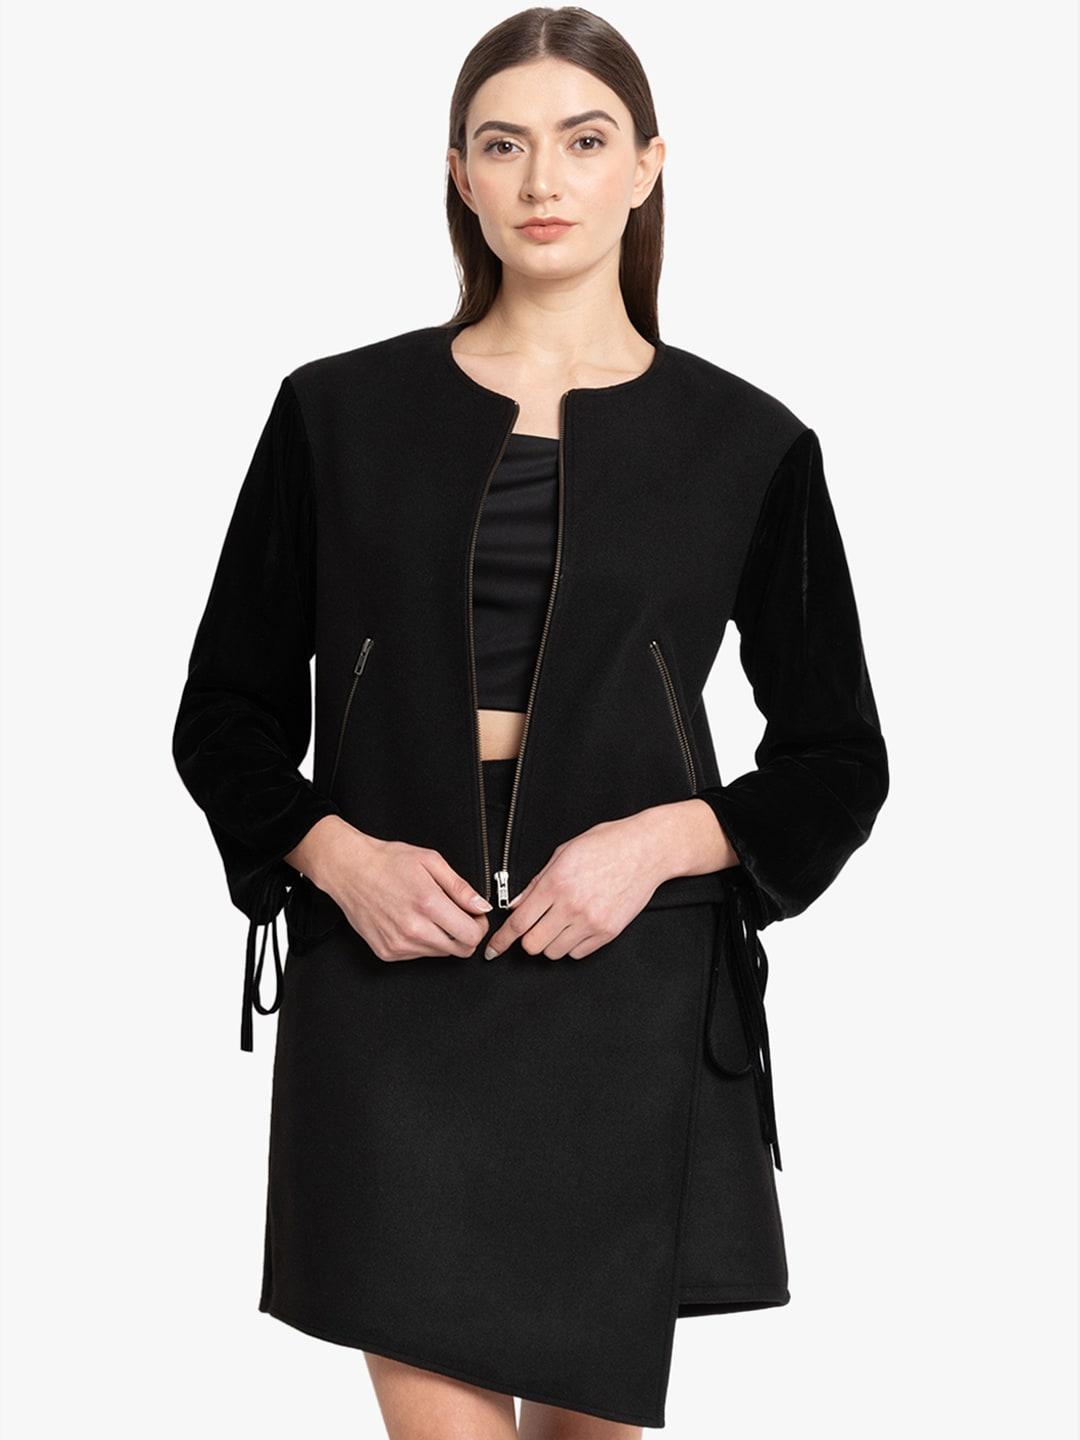 kazo-women-black-solid-tailored-jacket